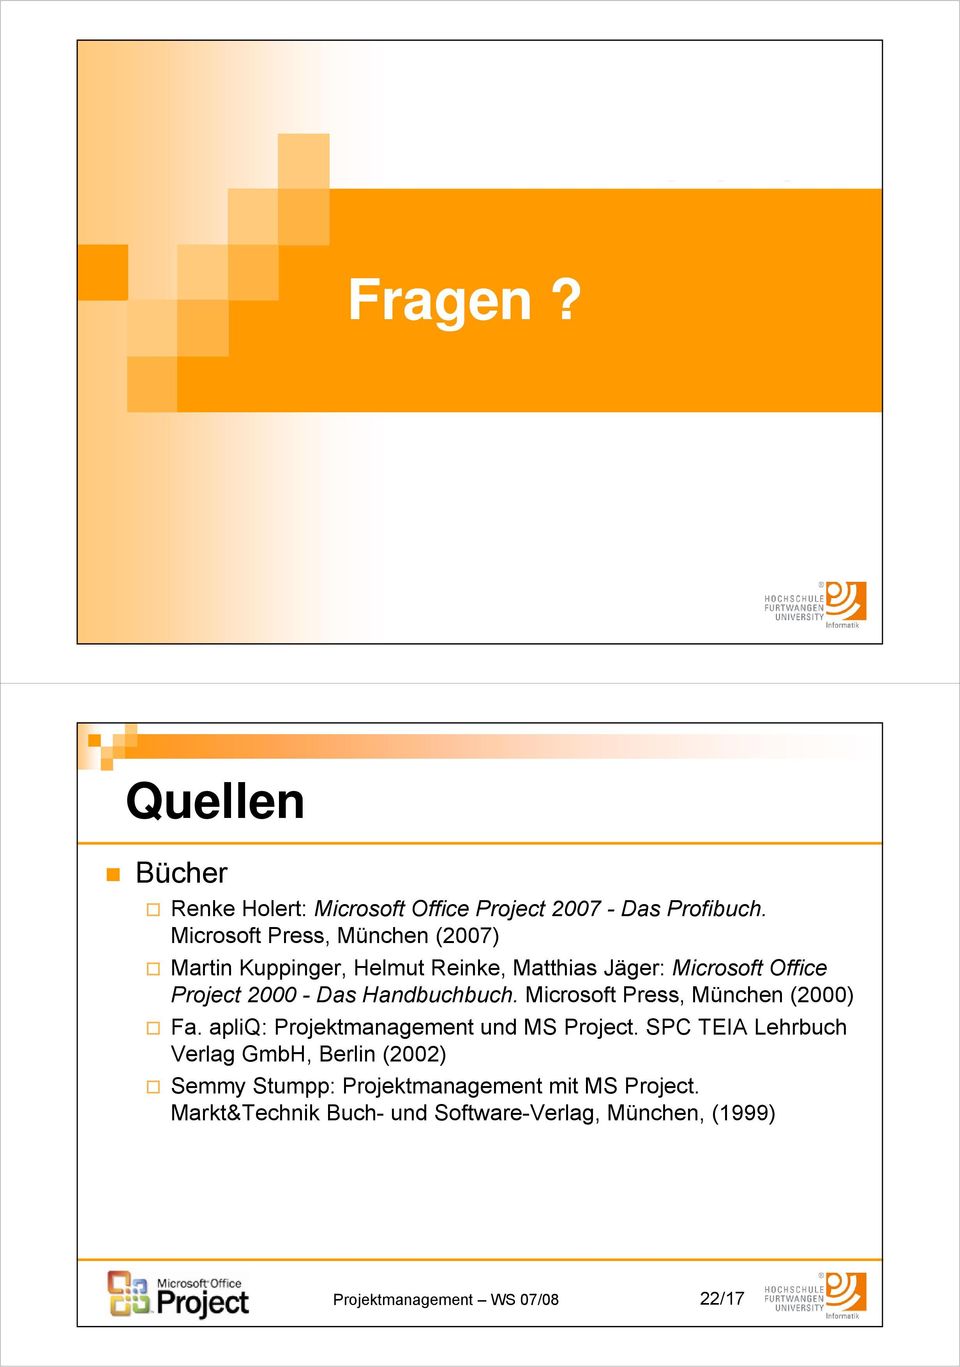 Handbuchbuch. Microsoft Press, München (2000) Fa. apliq: Projektmanagement und MS Project.